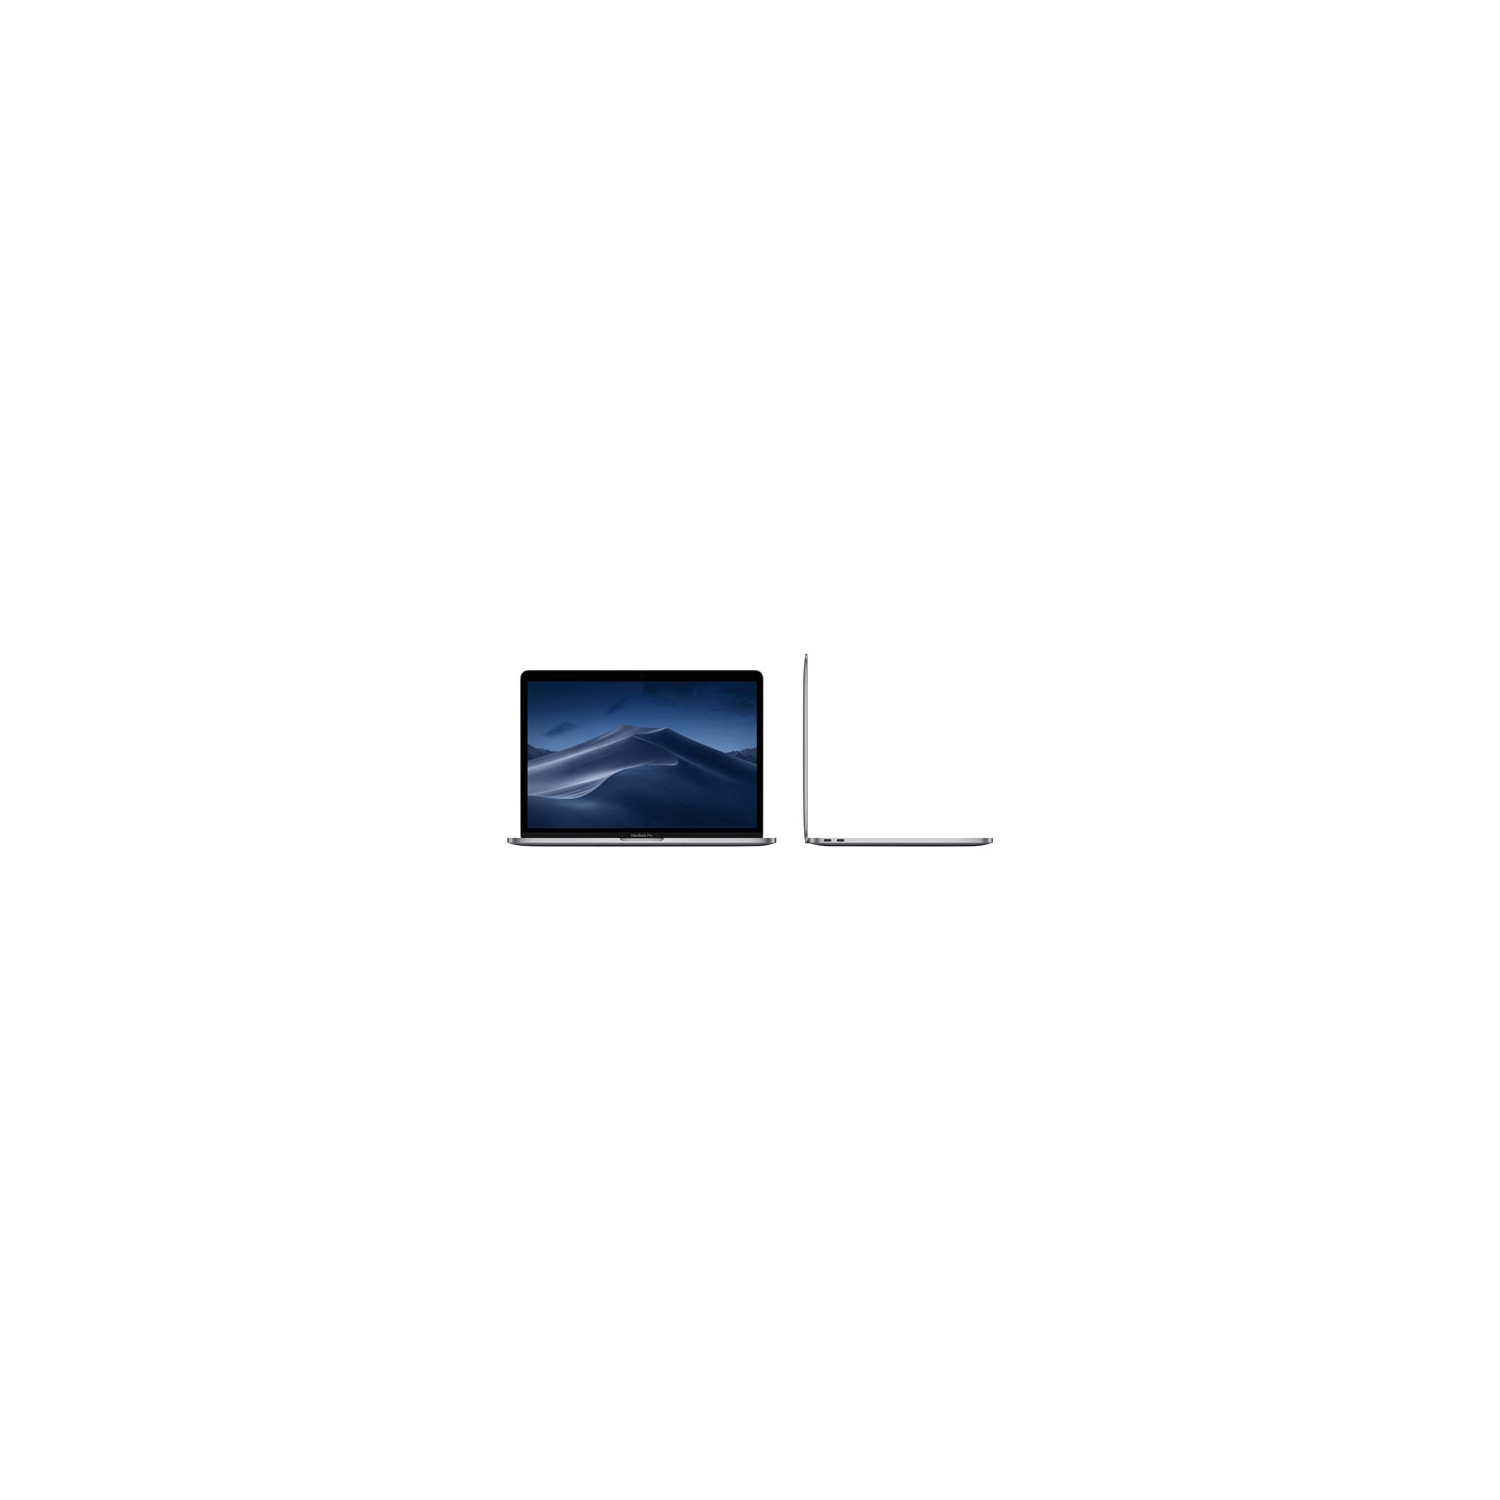 Open Box - Apple MacBook Pro 13.3" Laptop (Intel Core i5 2.3GHz / 256GB SSD / 8GB RAM) - (2017 Model) Space Grey - English